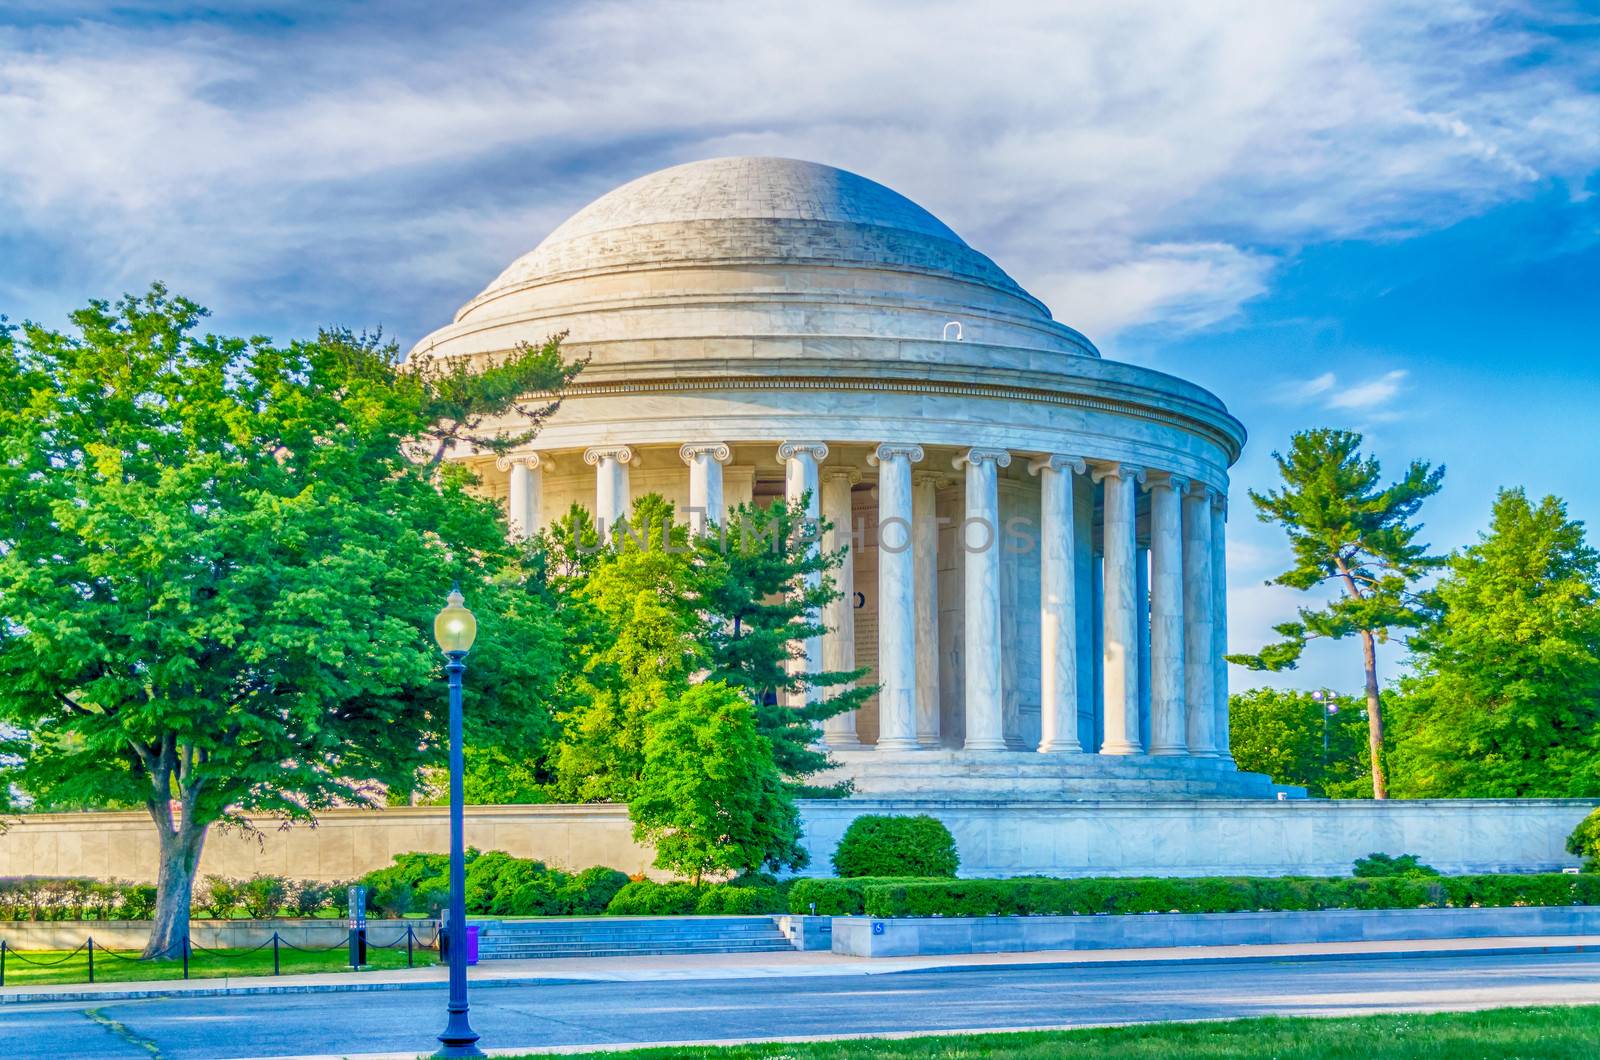 Jefferson Memorial in Washington DC by marcorubino